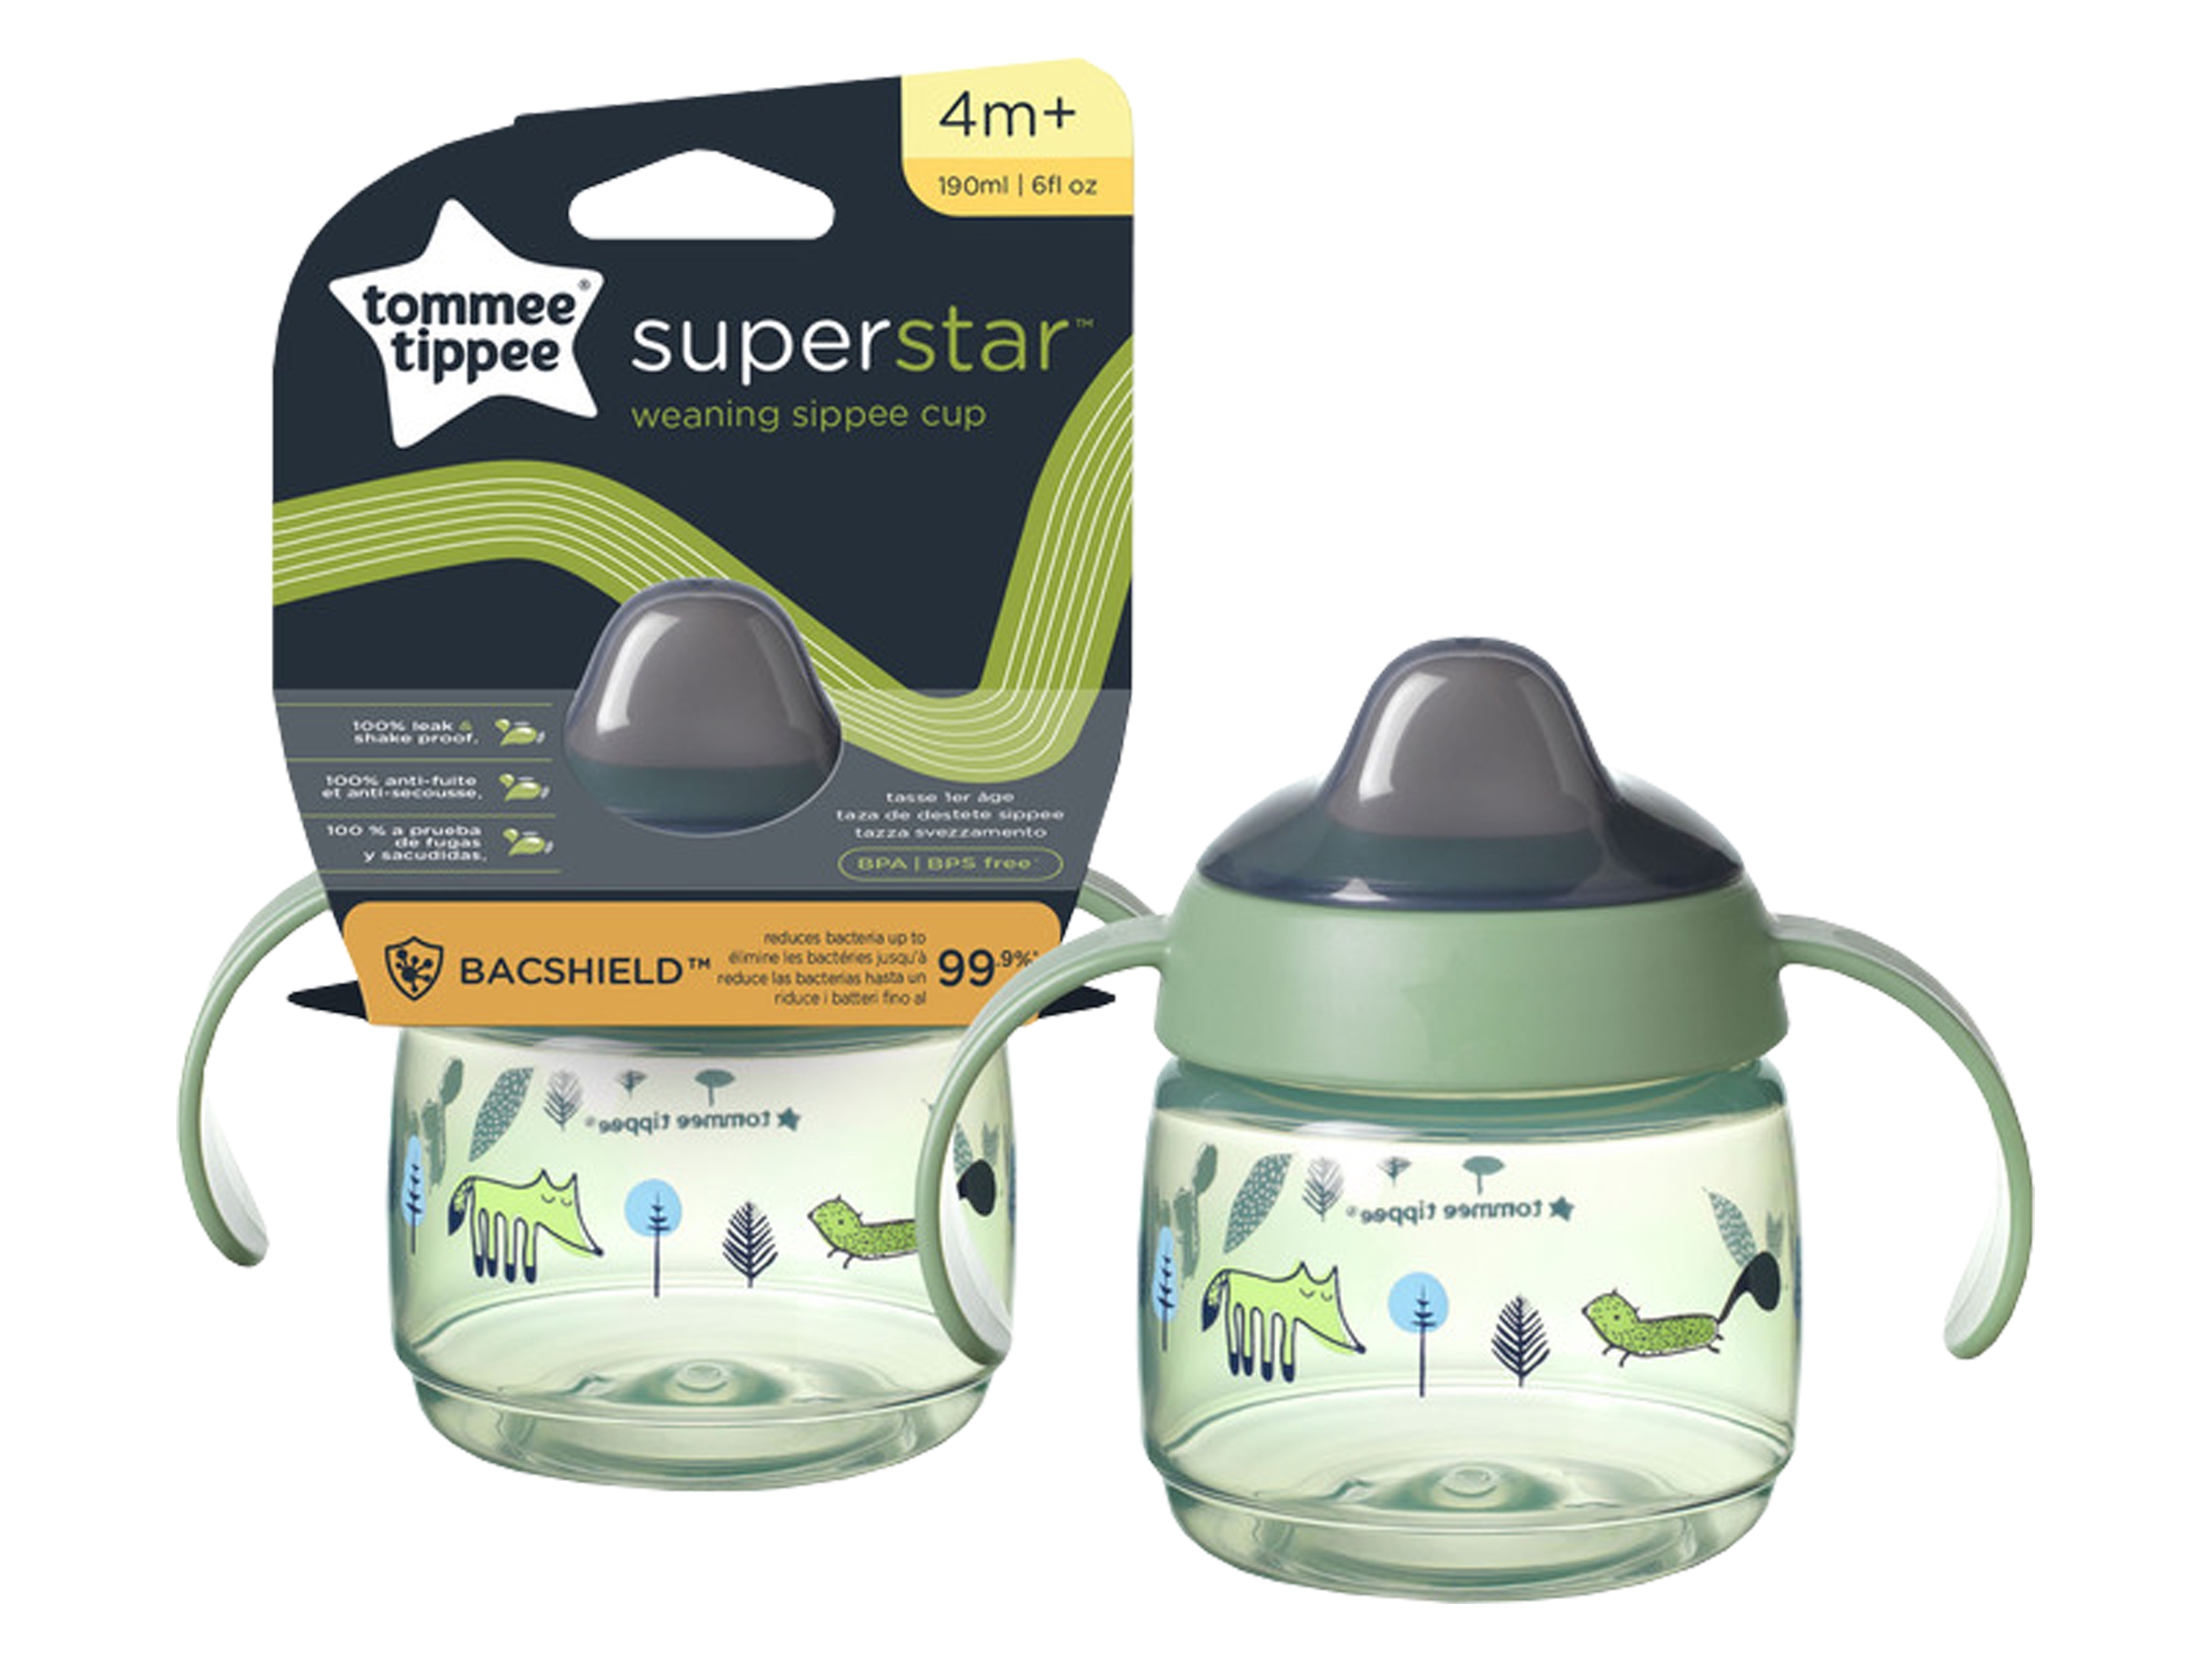 Tommee Tippee Superstar Sippee Cup 4md+, grønn, 1 stk.